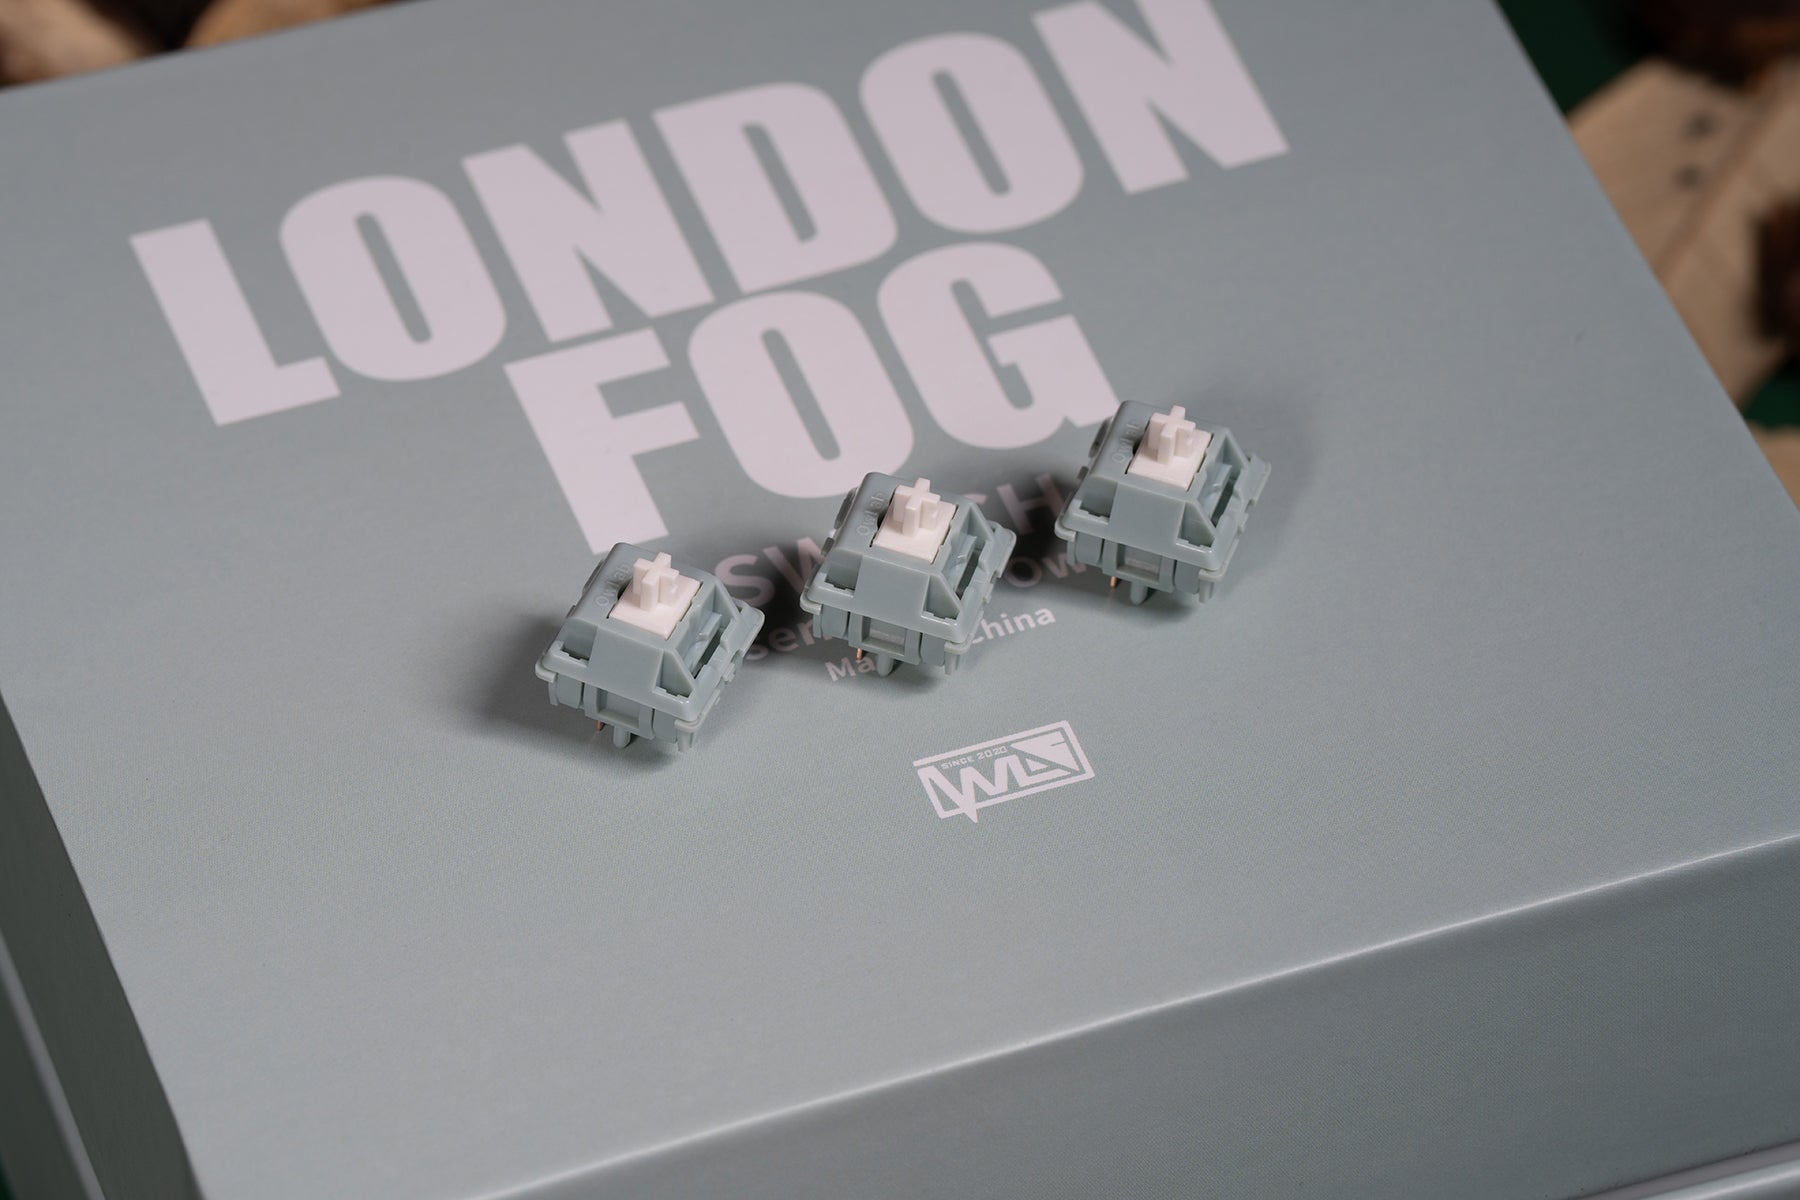 Owlab London Fog in Stock!